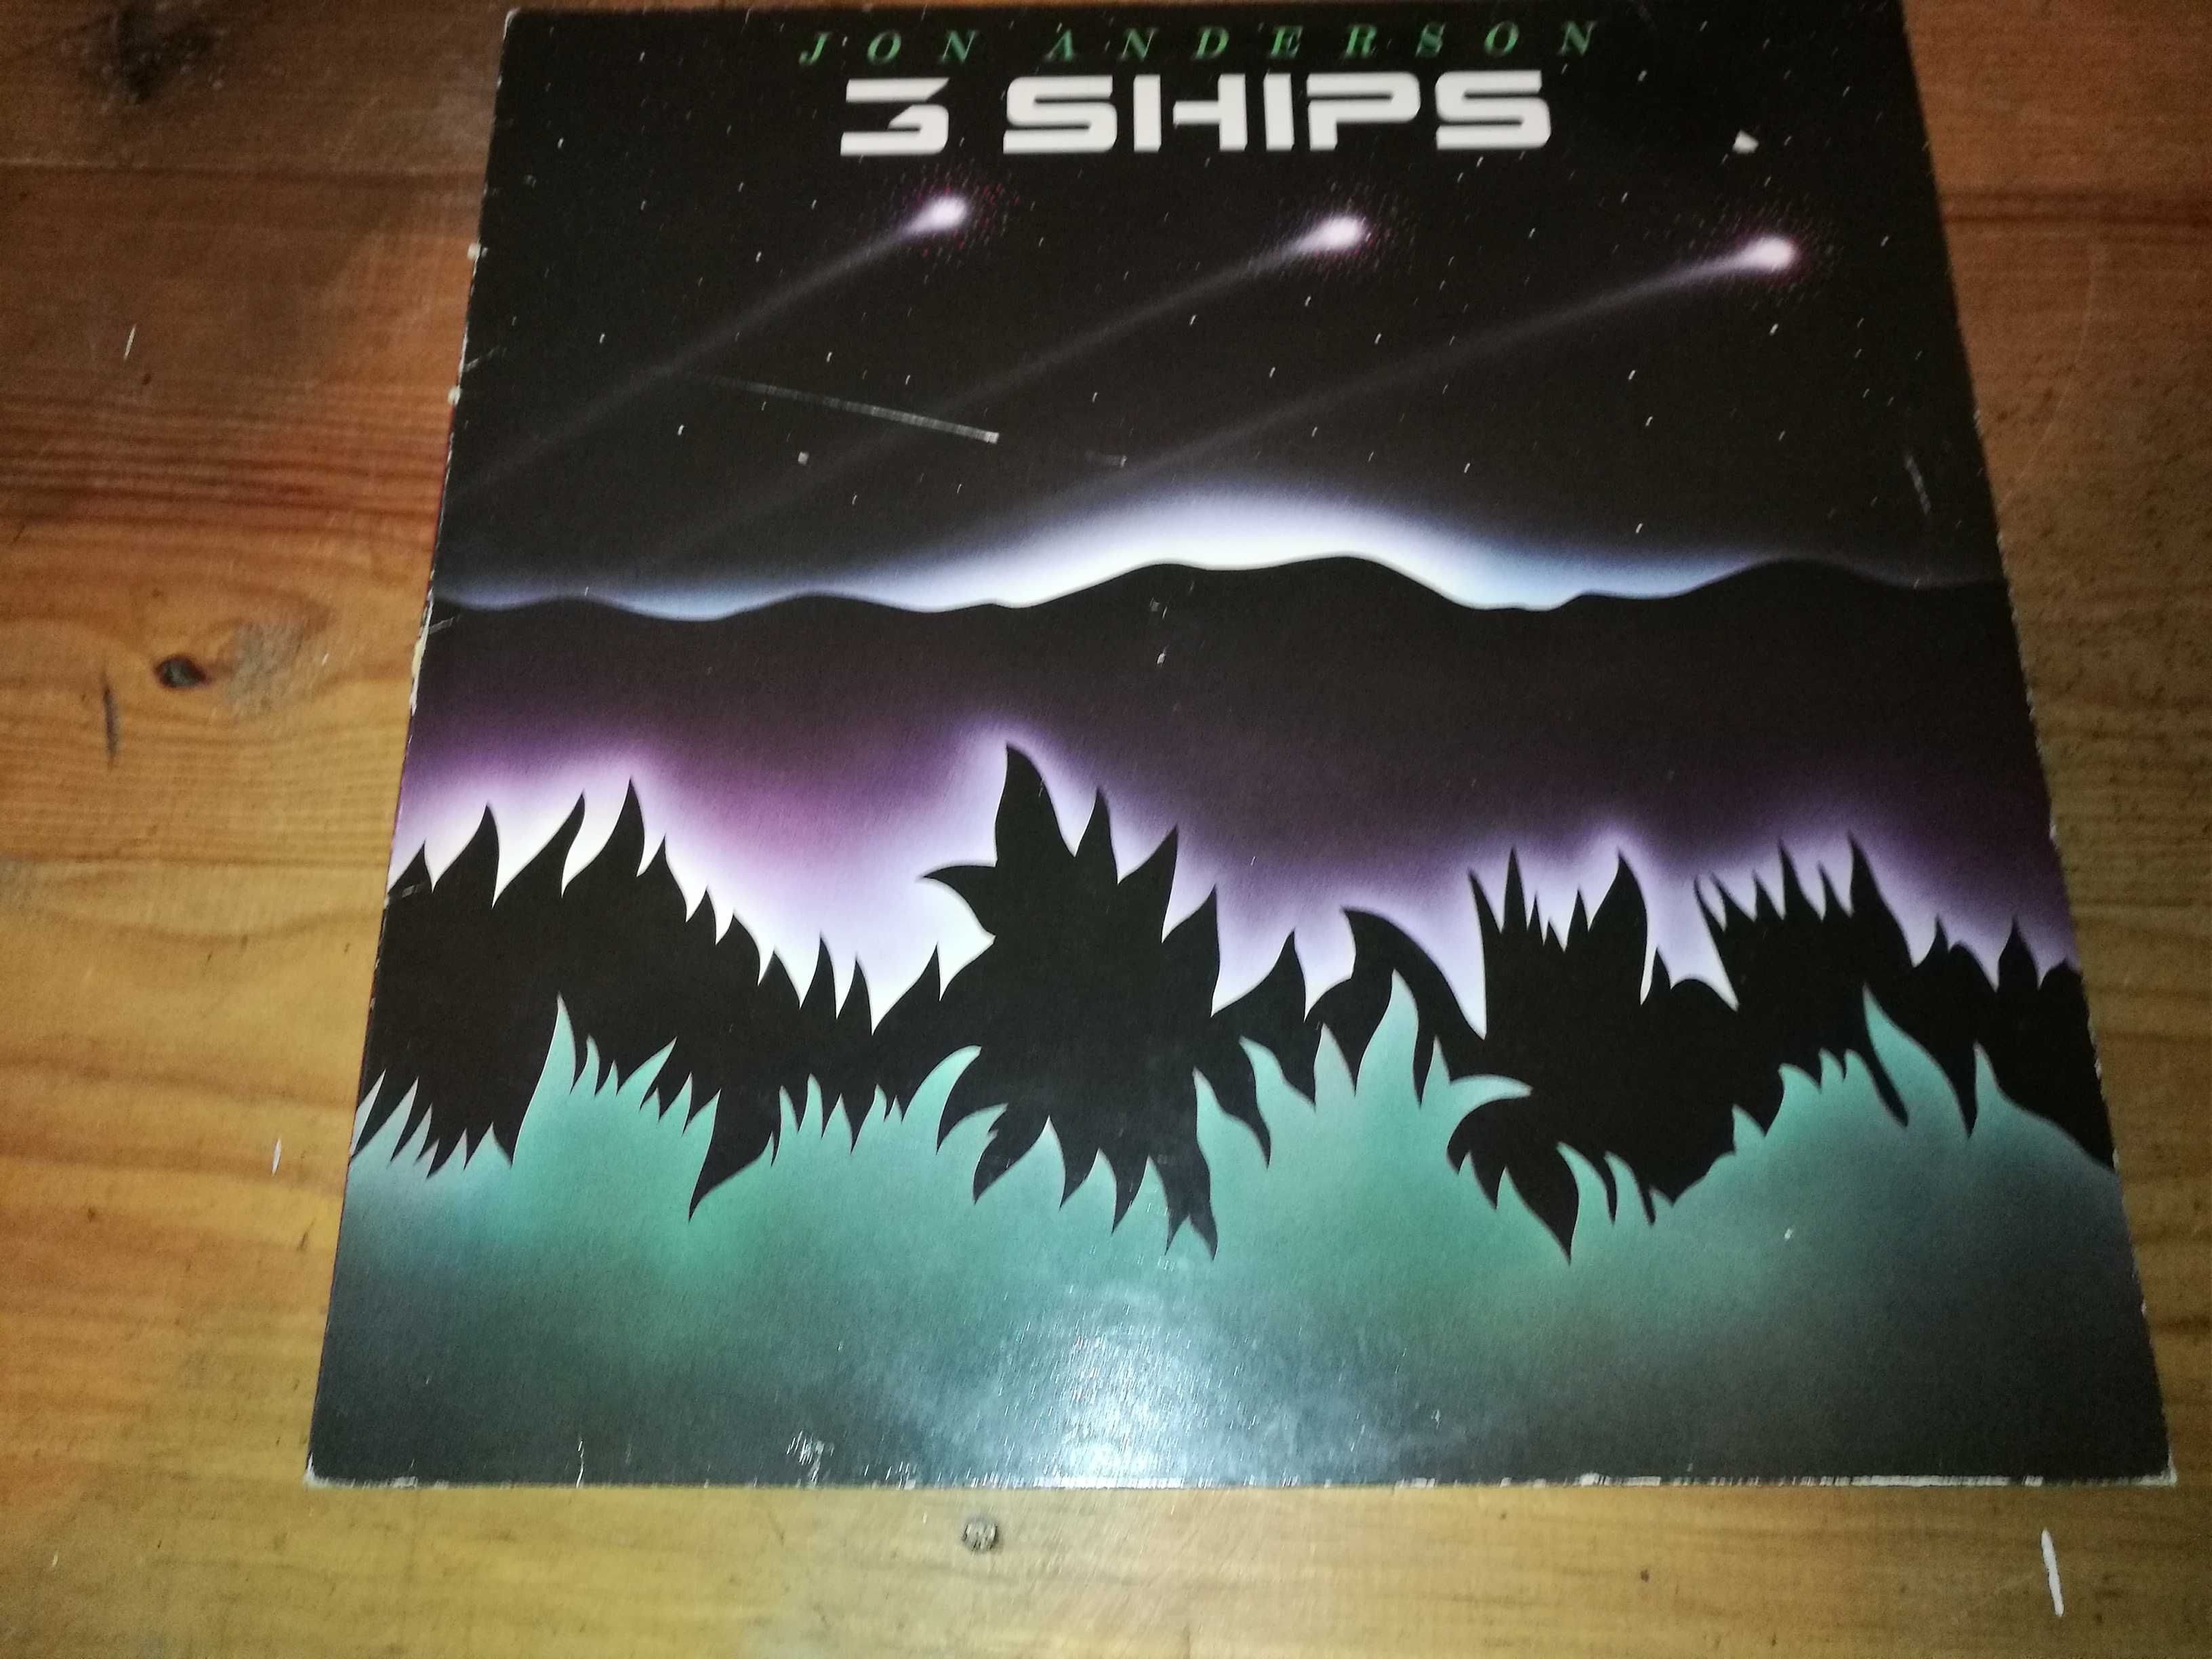 Jon anderson - 3 Ships LP